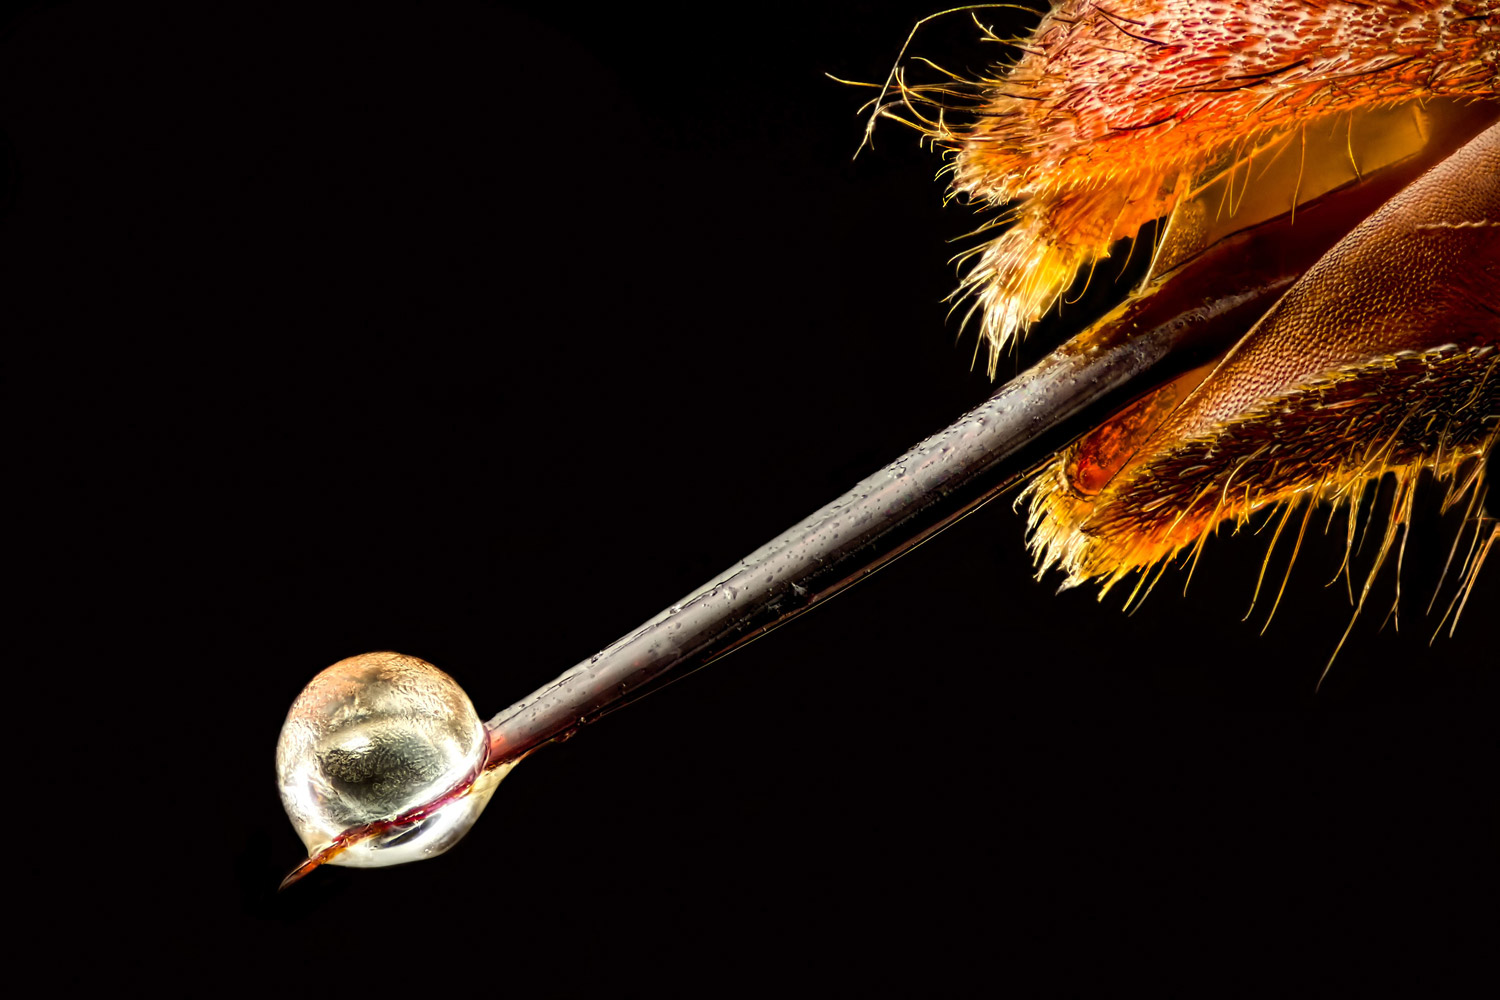 Vespa velutina (Asian hornet) with venom on its stinger, © Pierre Anquet, La Tour-du-Crieu, Ariège, France, 19th Place, Nikon’s Small World - Photomicrography Competition